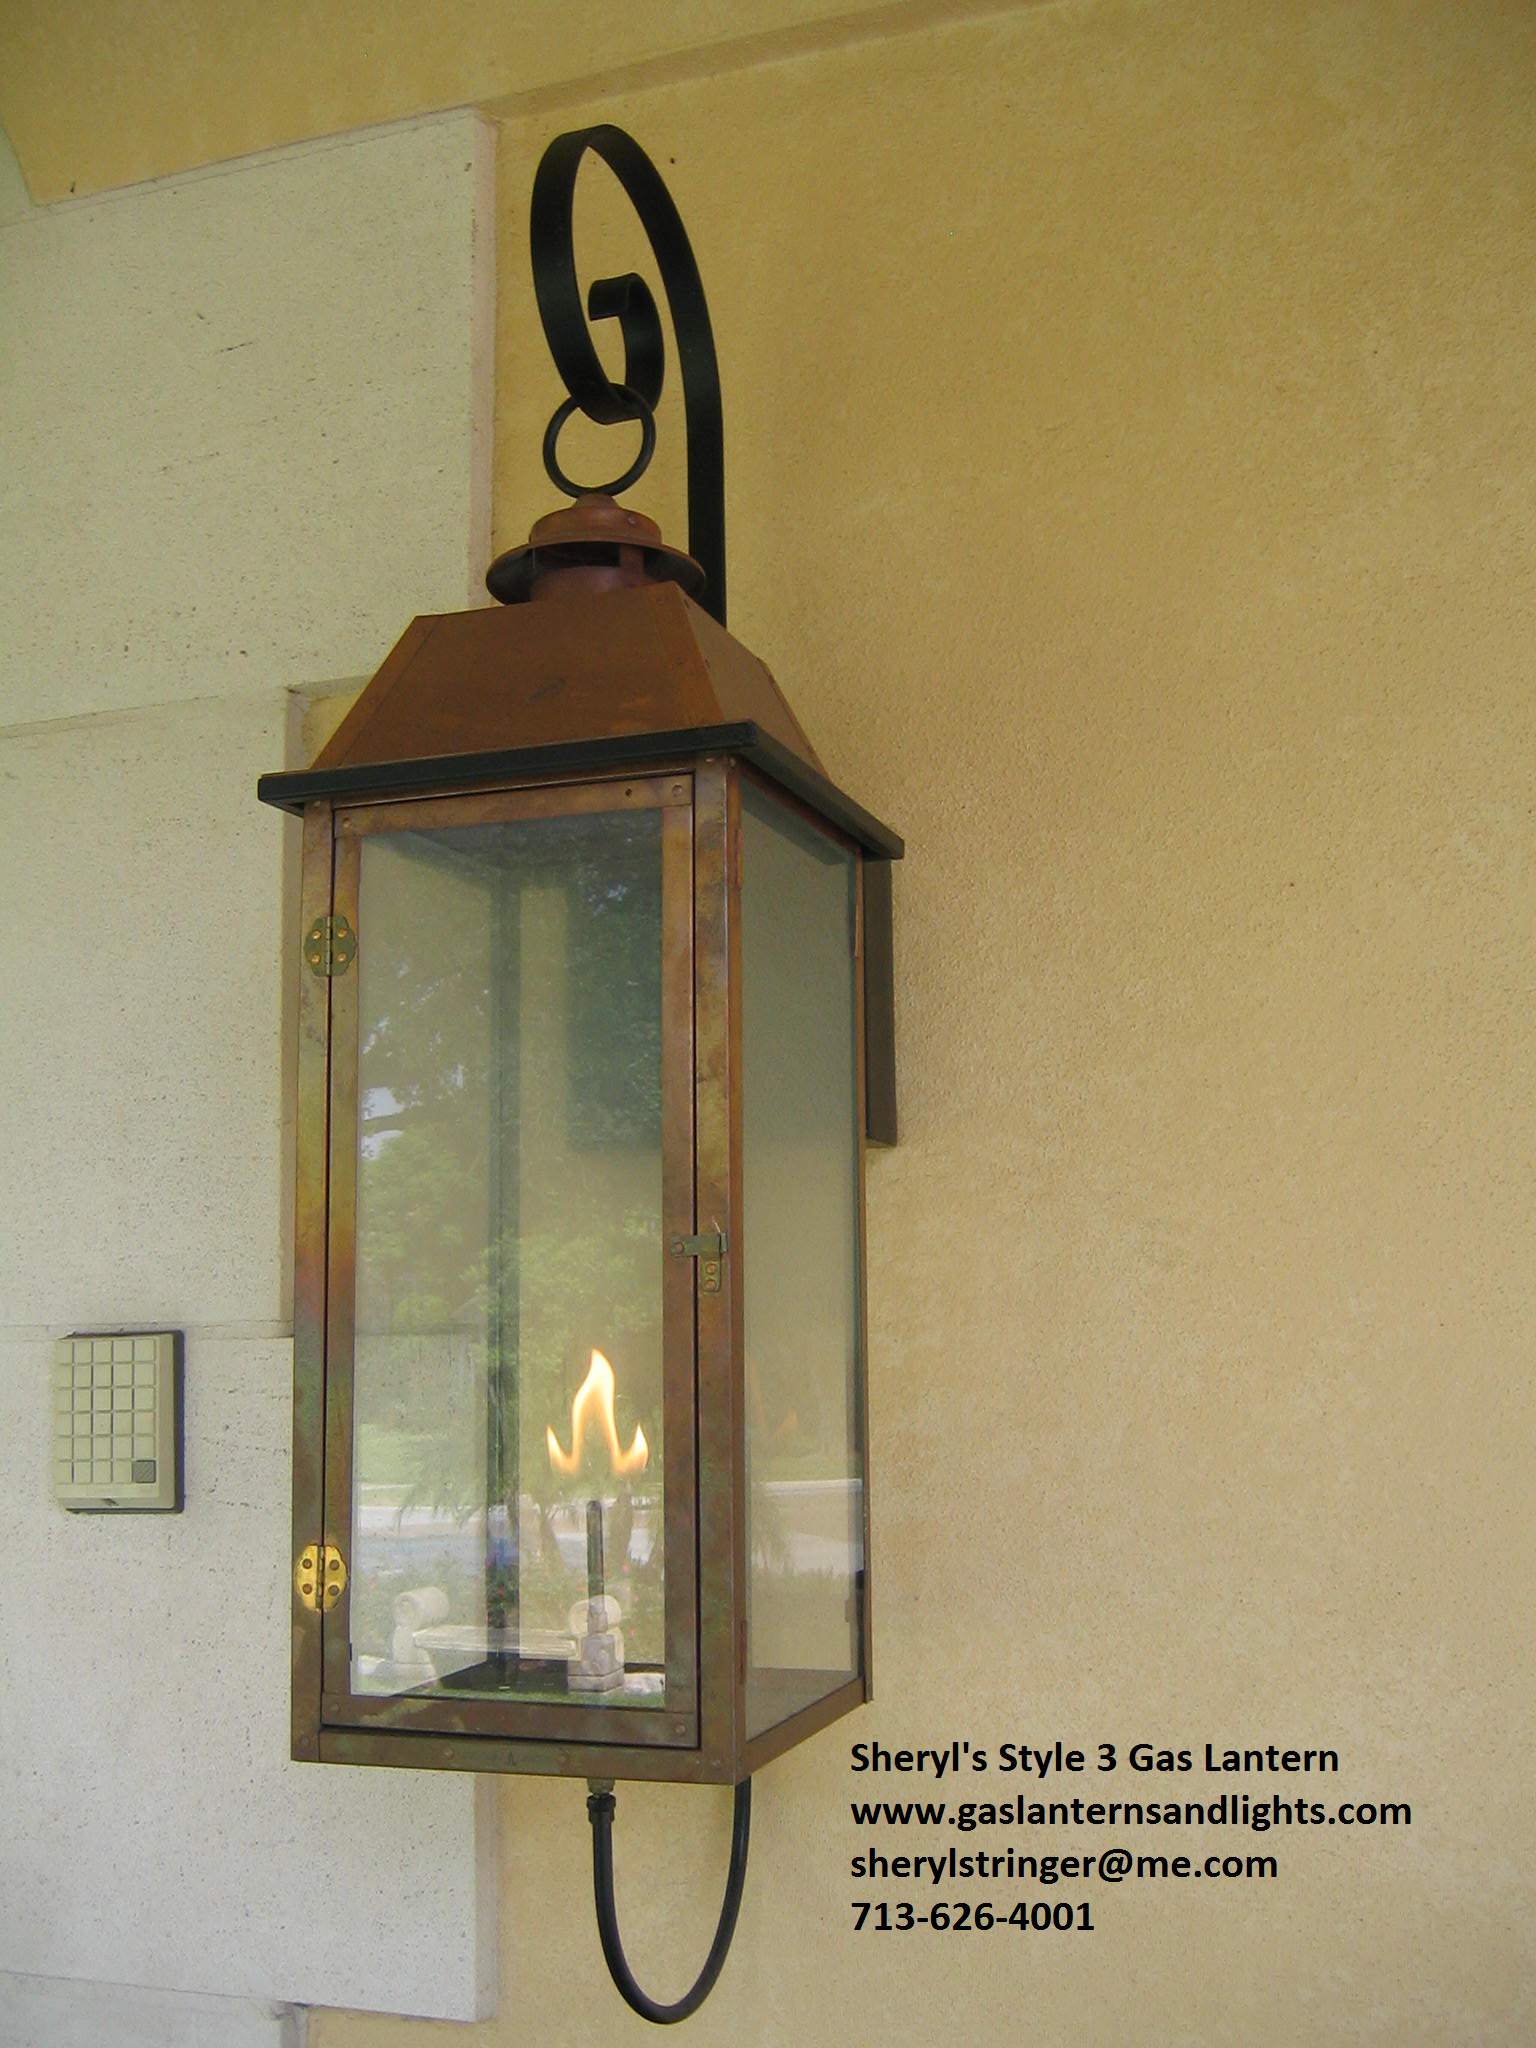 Sheryl's Style 3 Transitional Gas Lantern